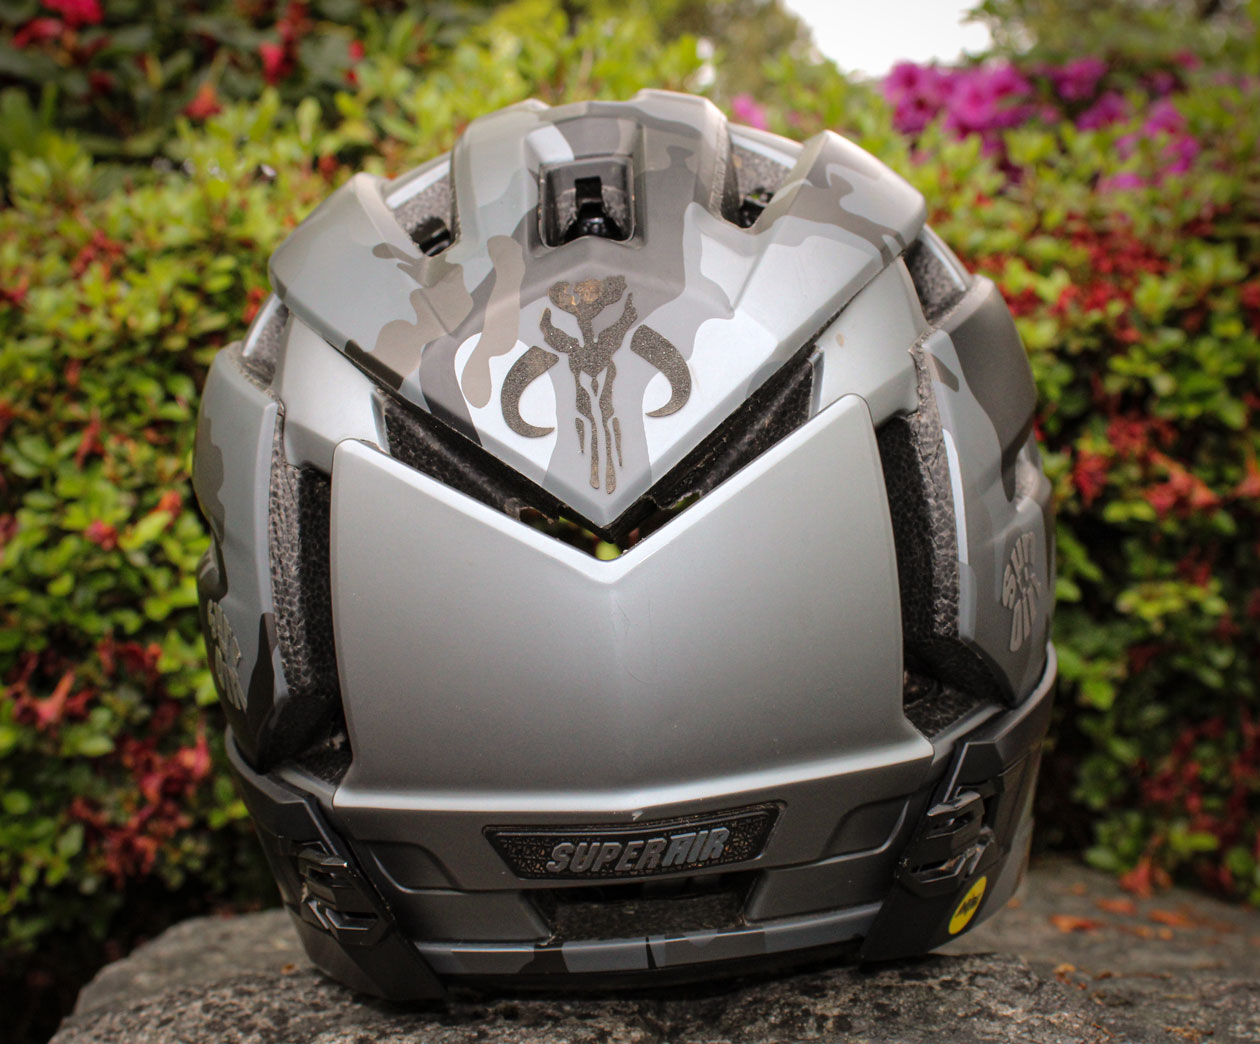 Bell Super Air R Helmet Review